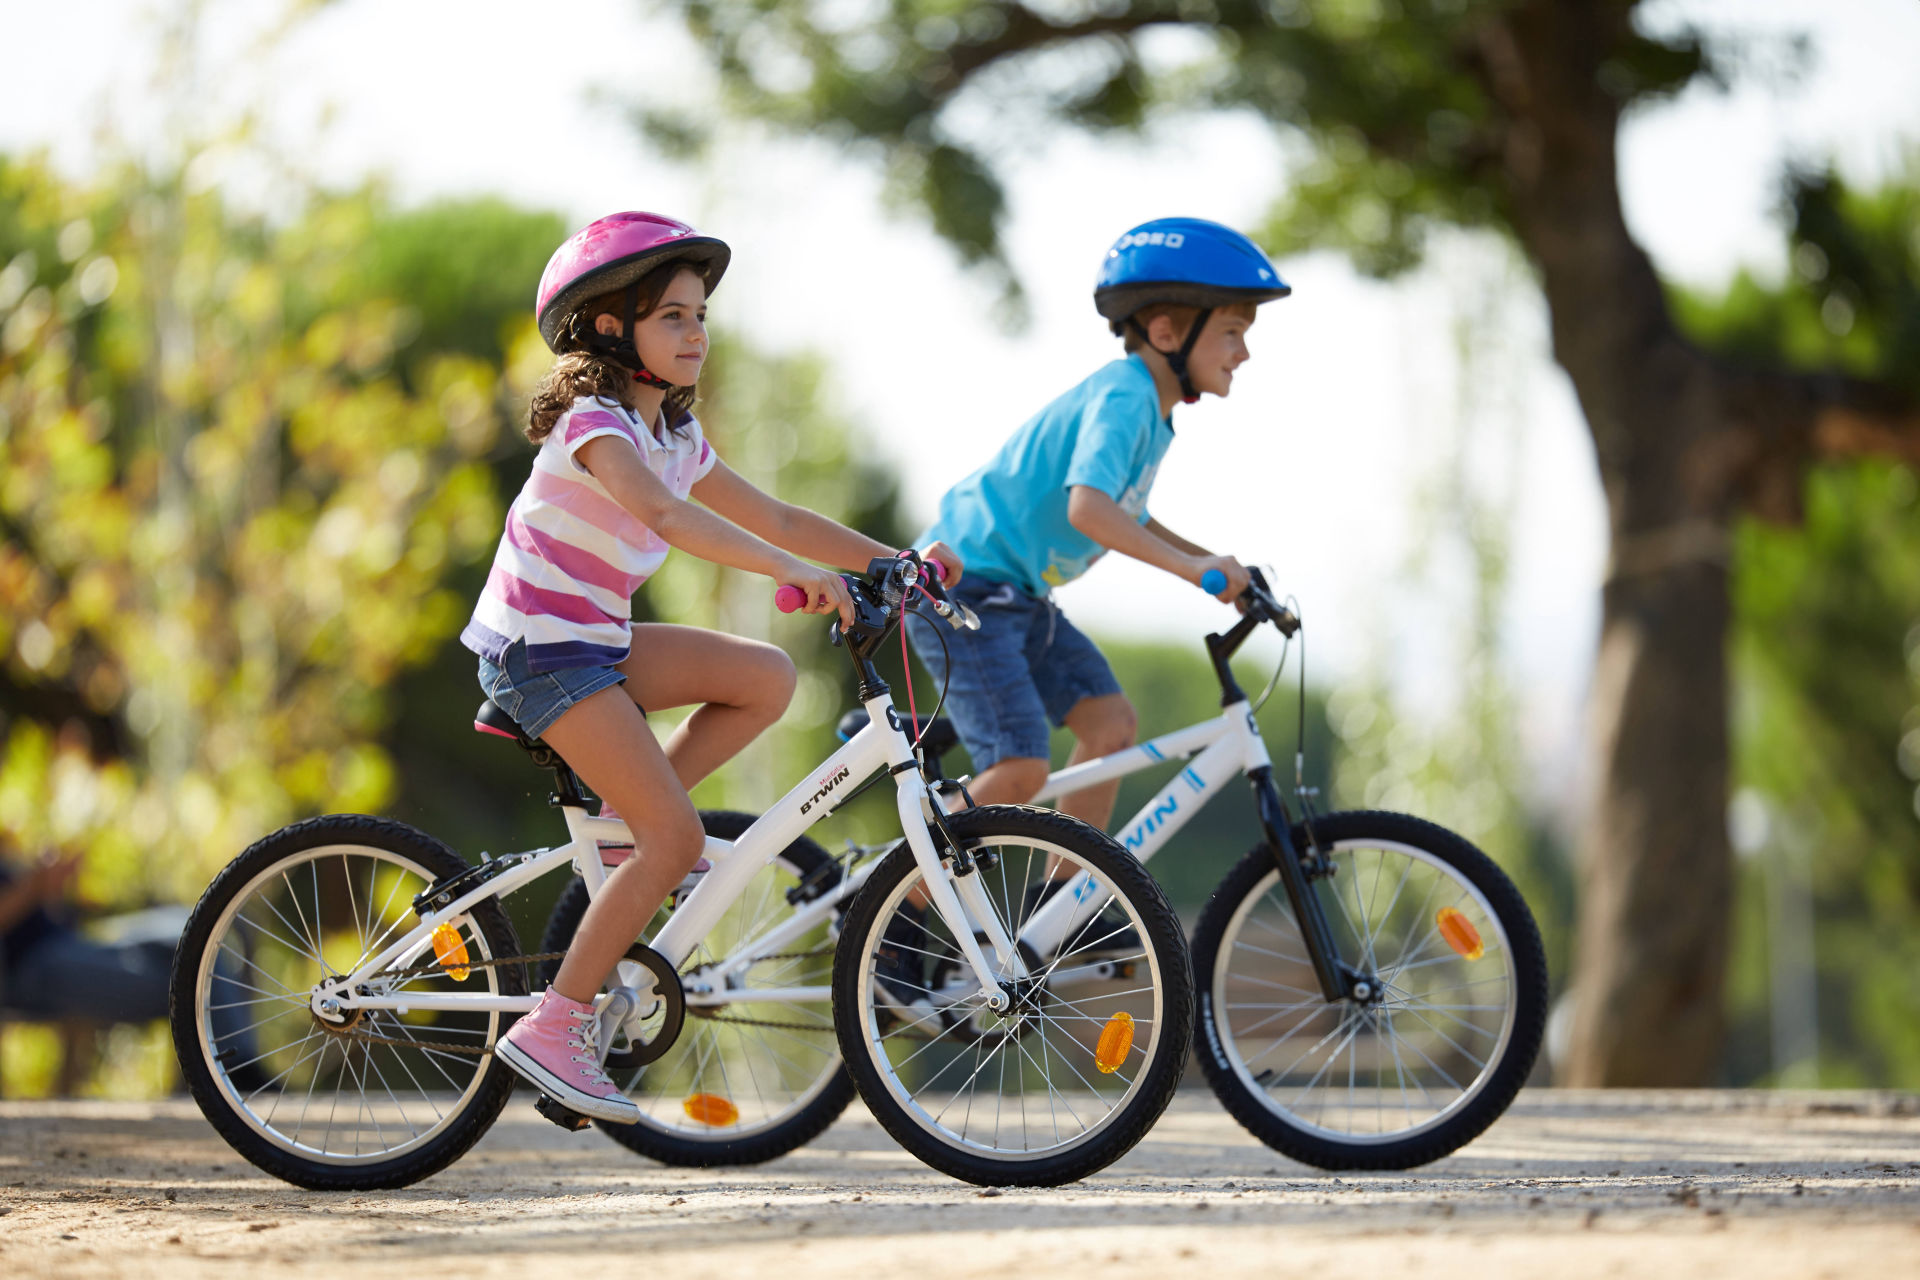 Get on the bike. Велосипед детский. Дети с велосипедом. Дети катаются на велосипеде. Катание на велосипеде.